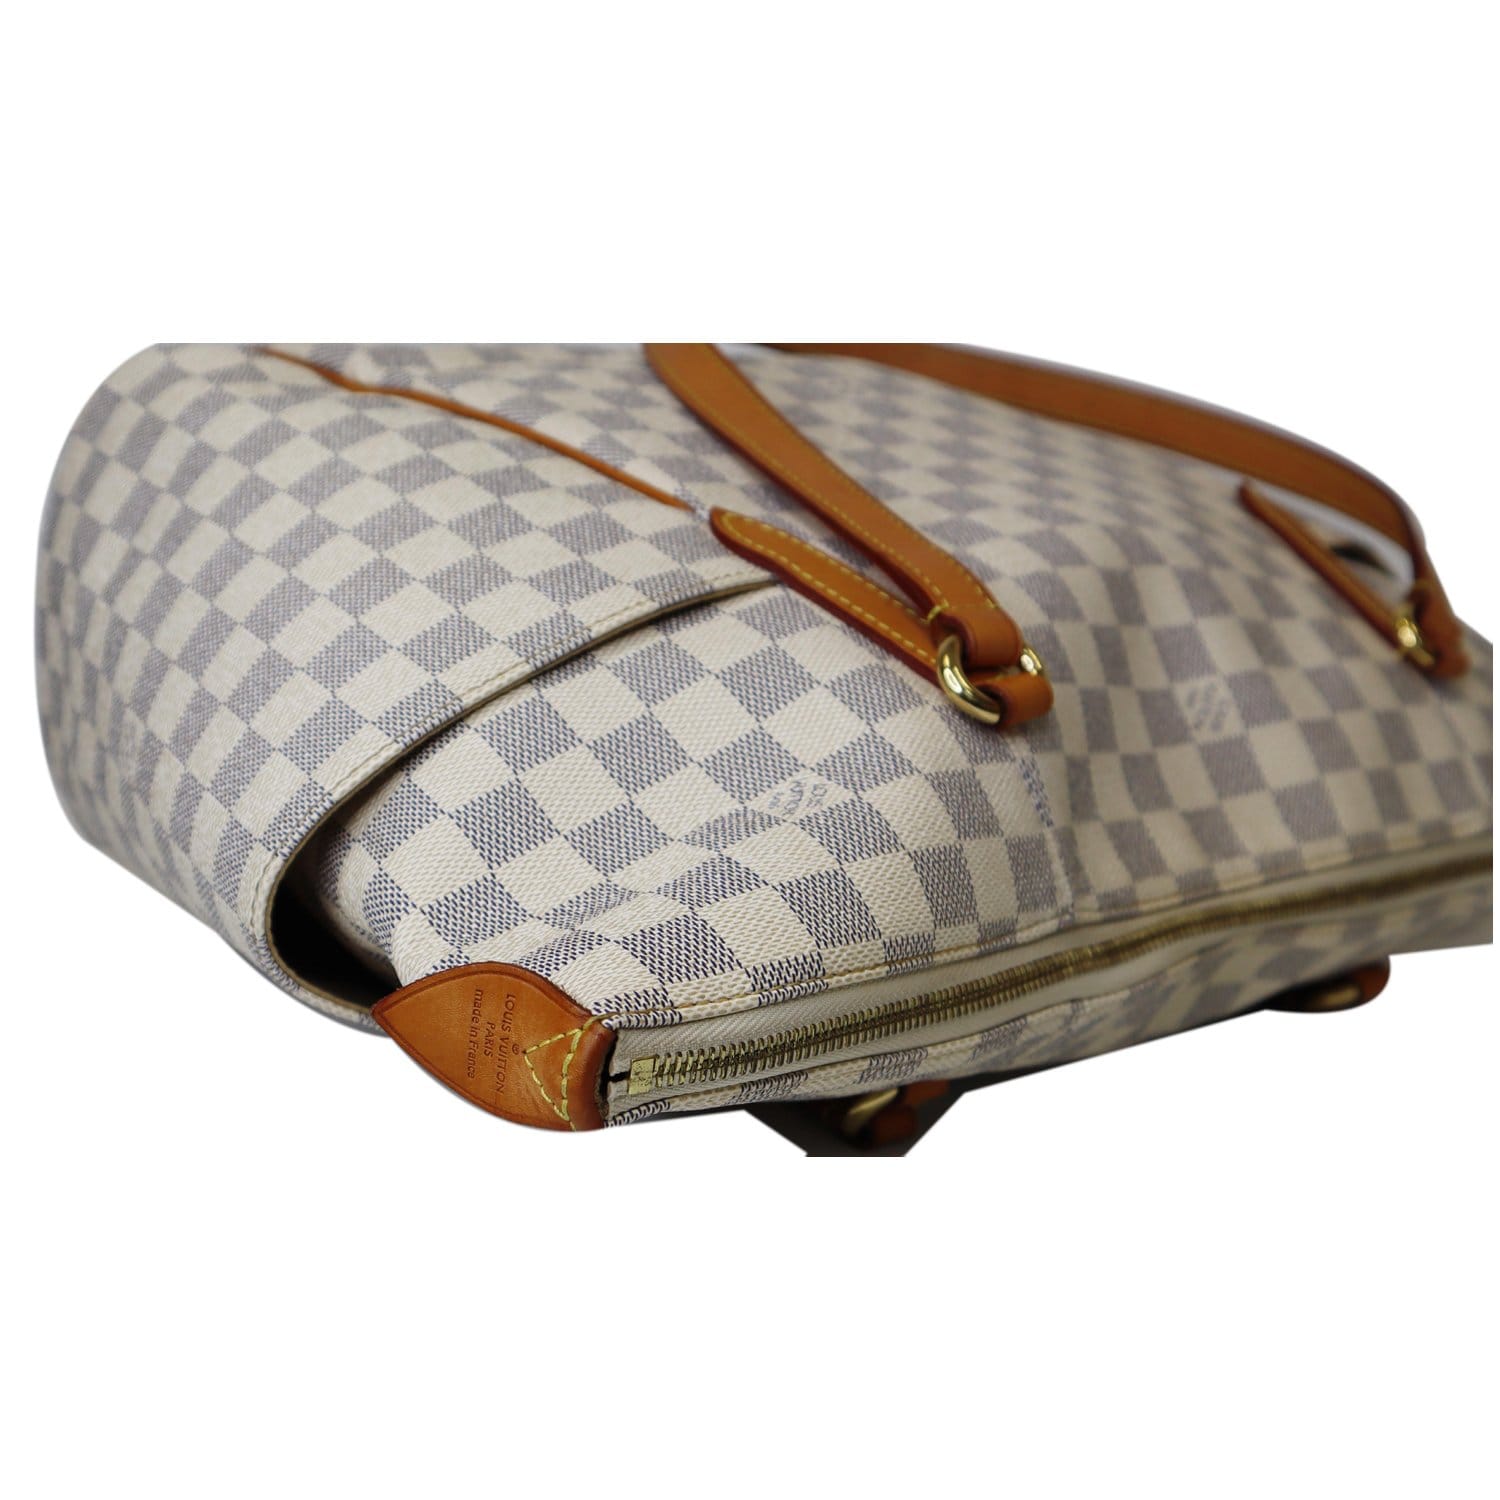 Louis Vuitton Galleria Shoulder bag for Sale in Online Auctions